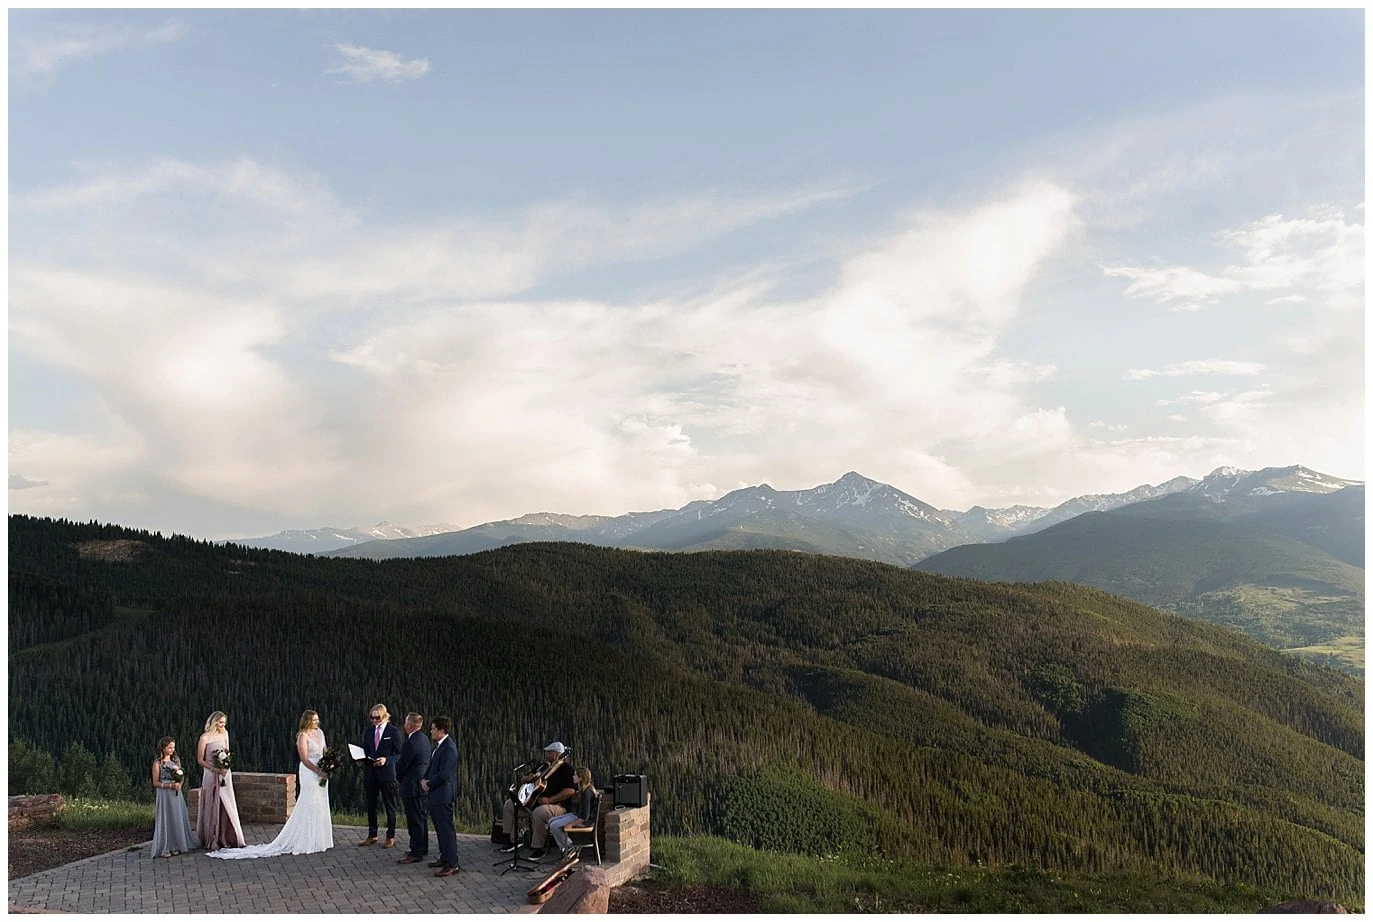 Vail Wedding Deck July microwedding by Colorado Microwedding Photographer Jennie Crate photographer